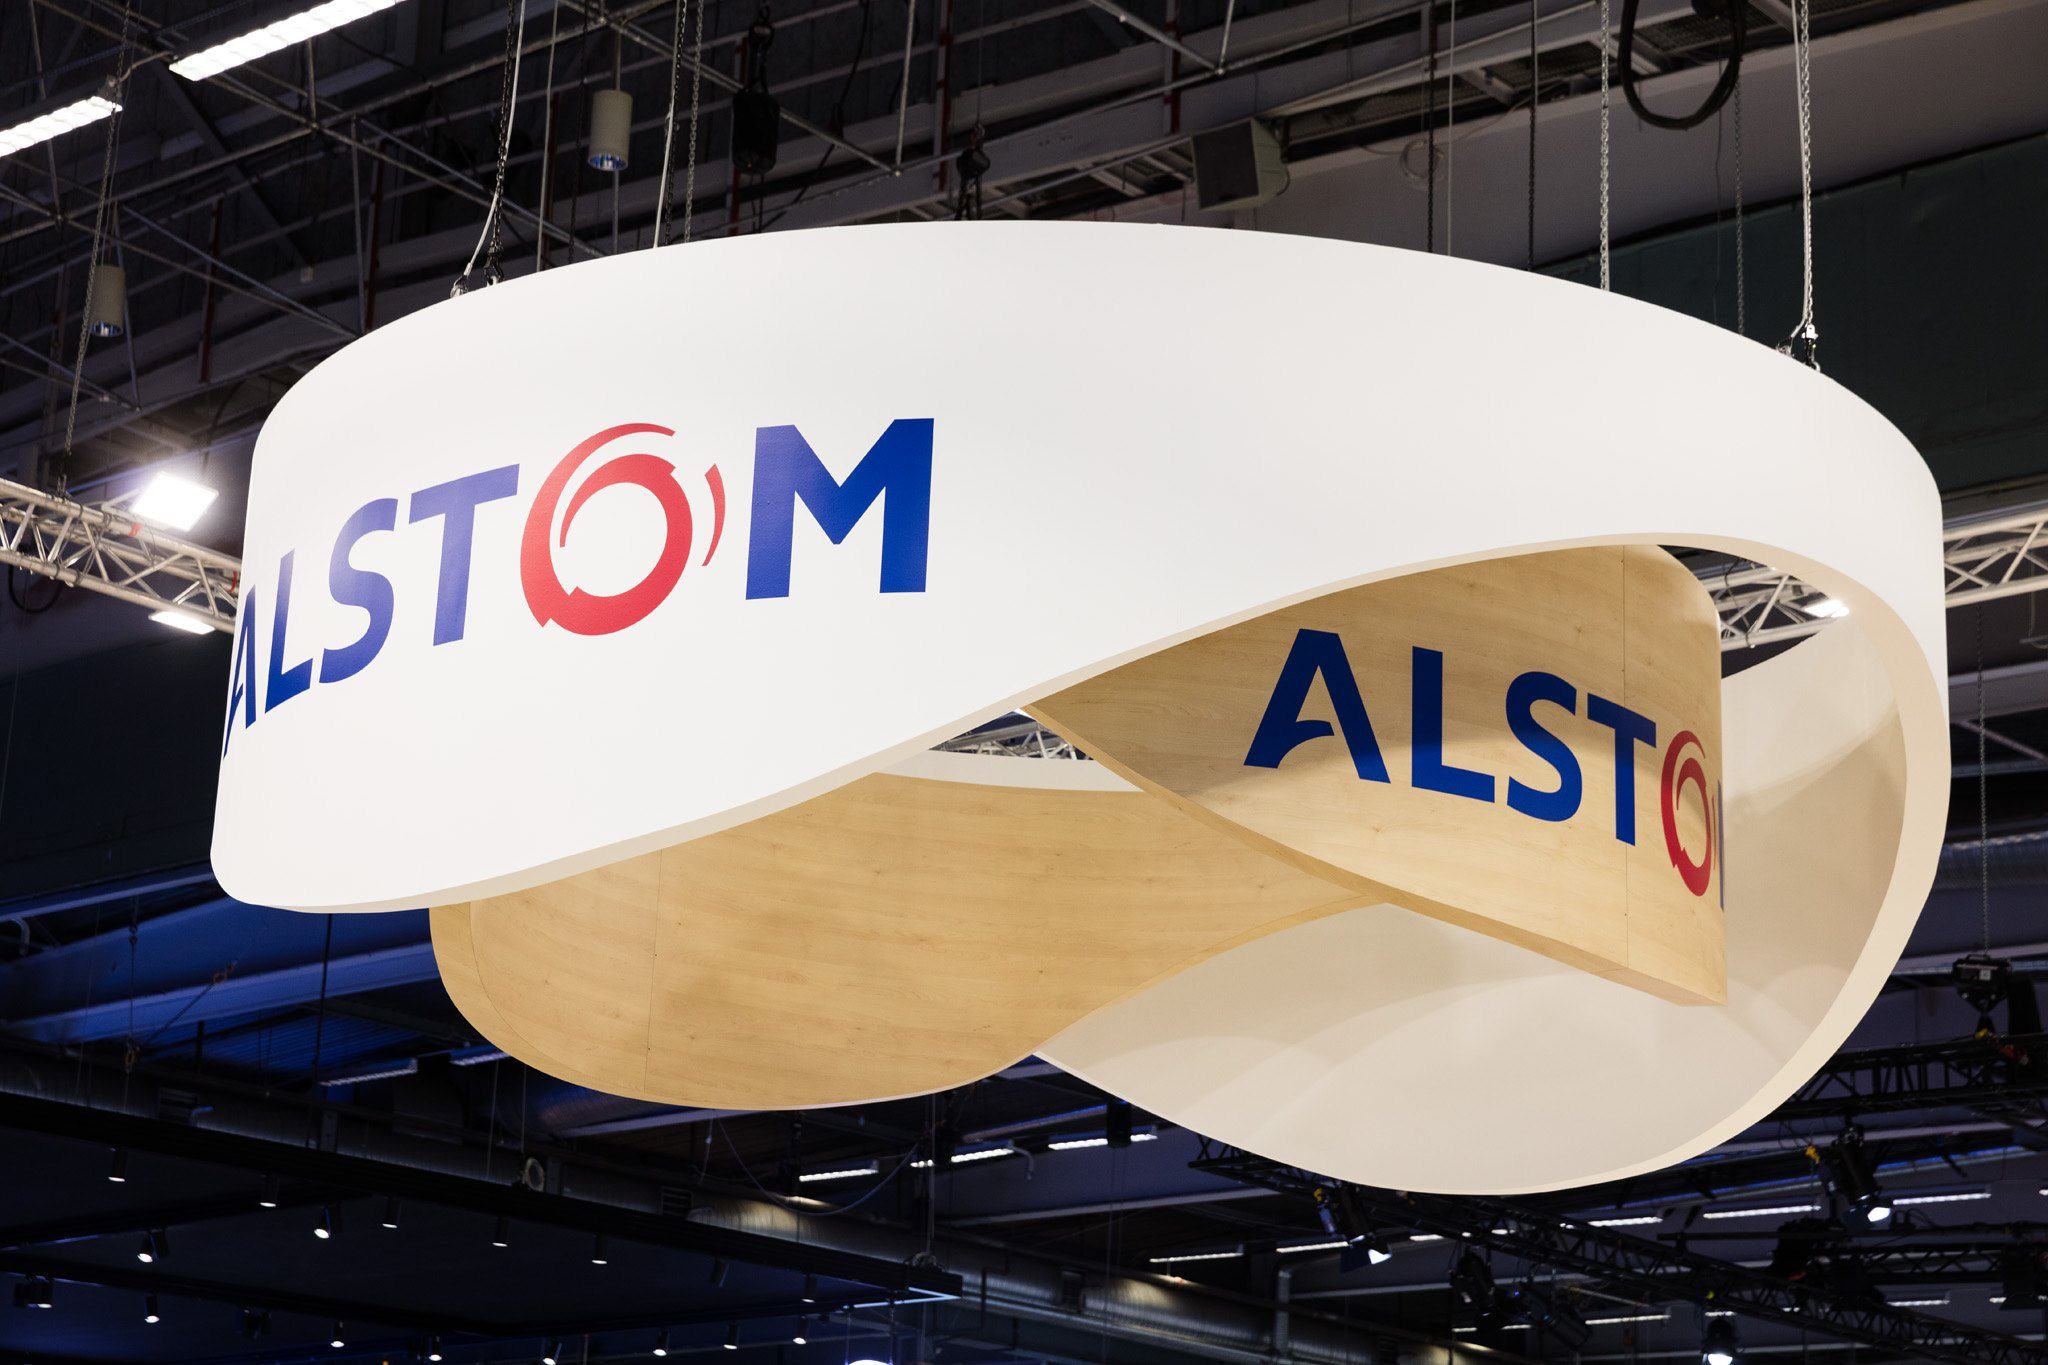 Alstom confirms talks underway to acquire Bombardier Transportation